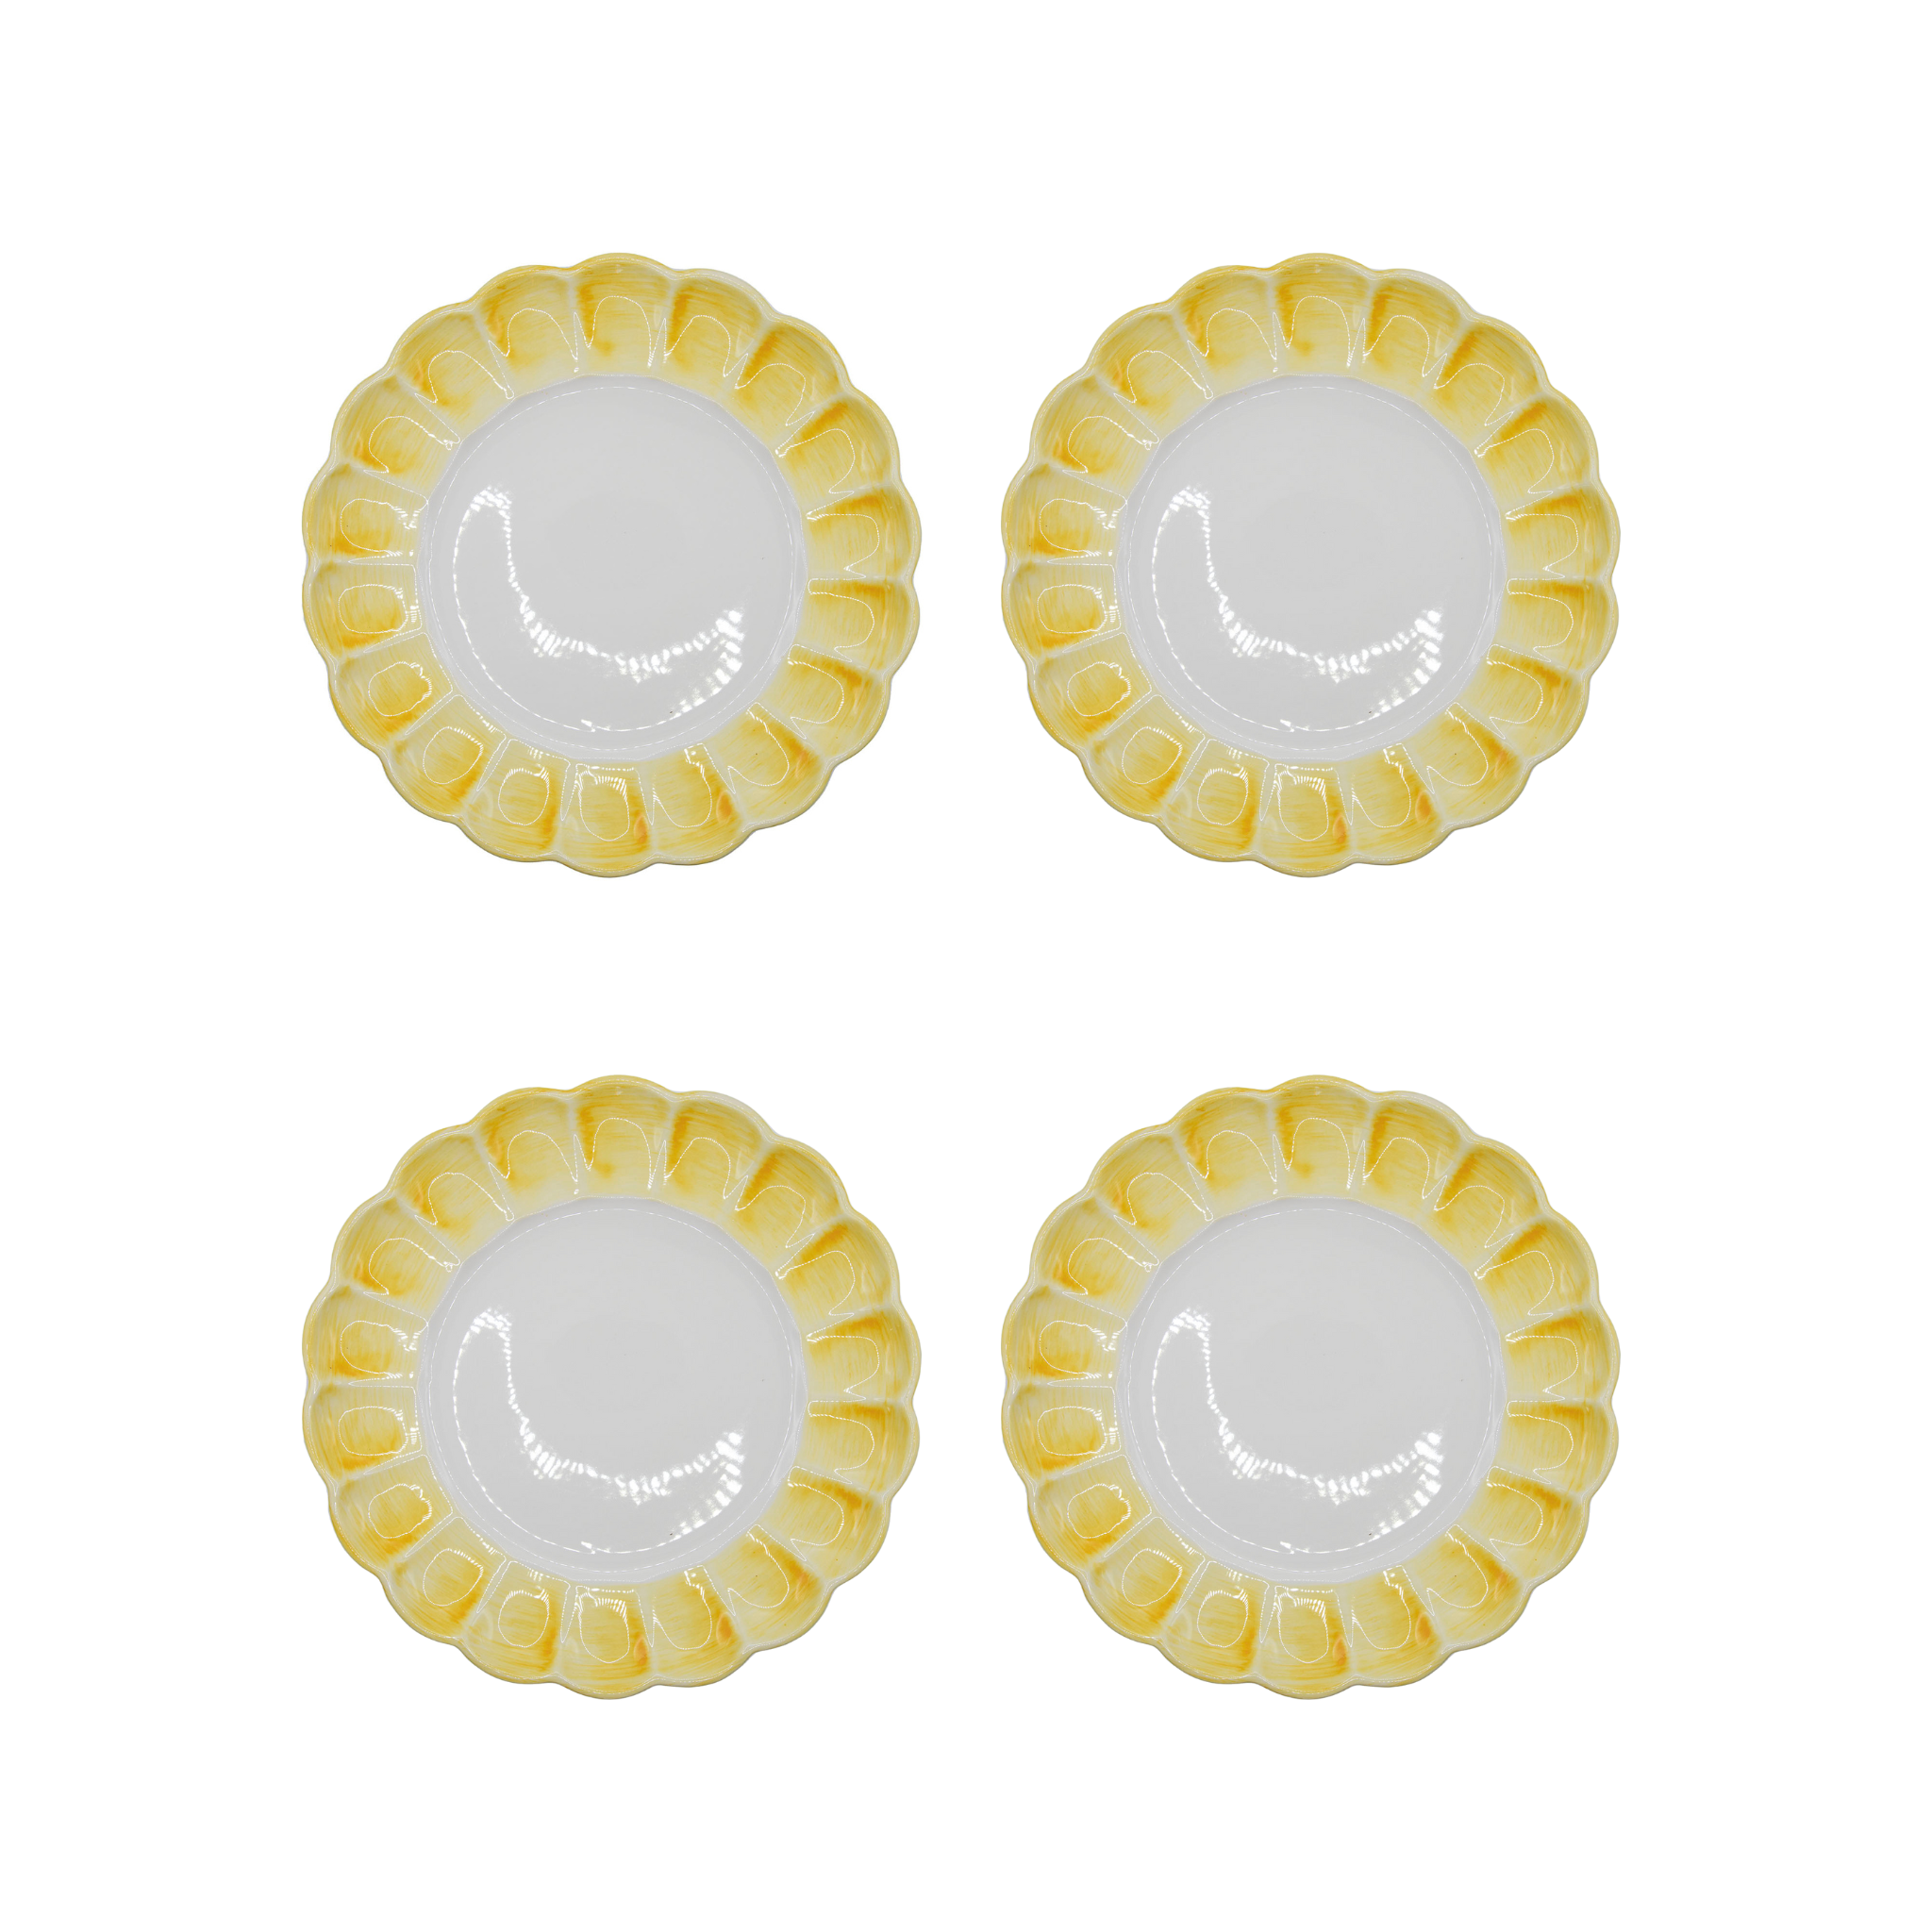 Lido Dinner Plate, Yellow, Set of 4 - Skye McAlpine Tavola